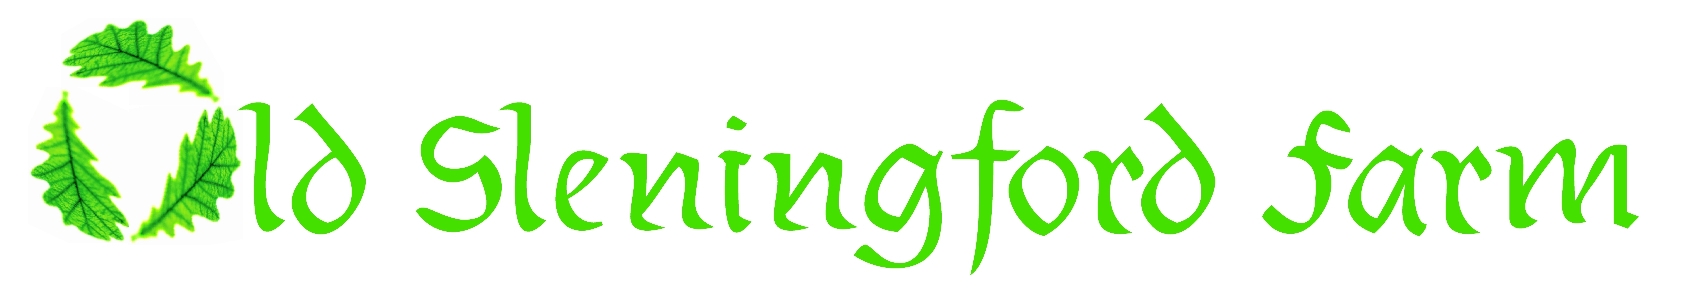 Old Sleningford Farm Logo